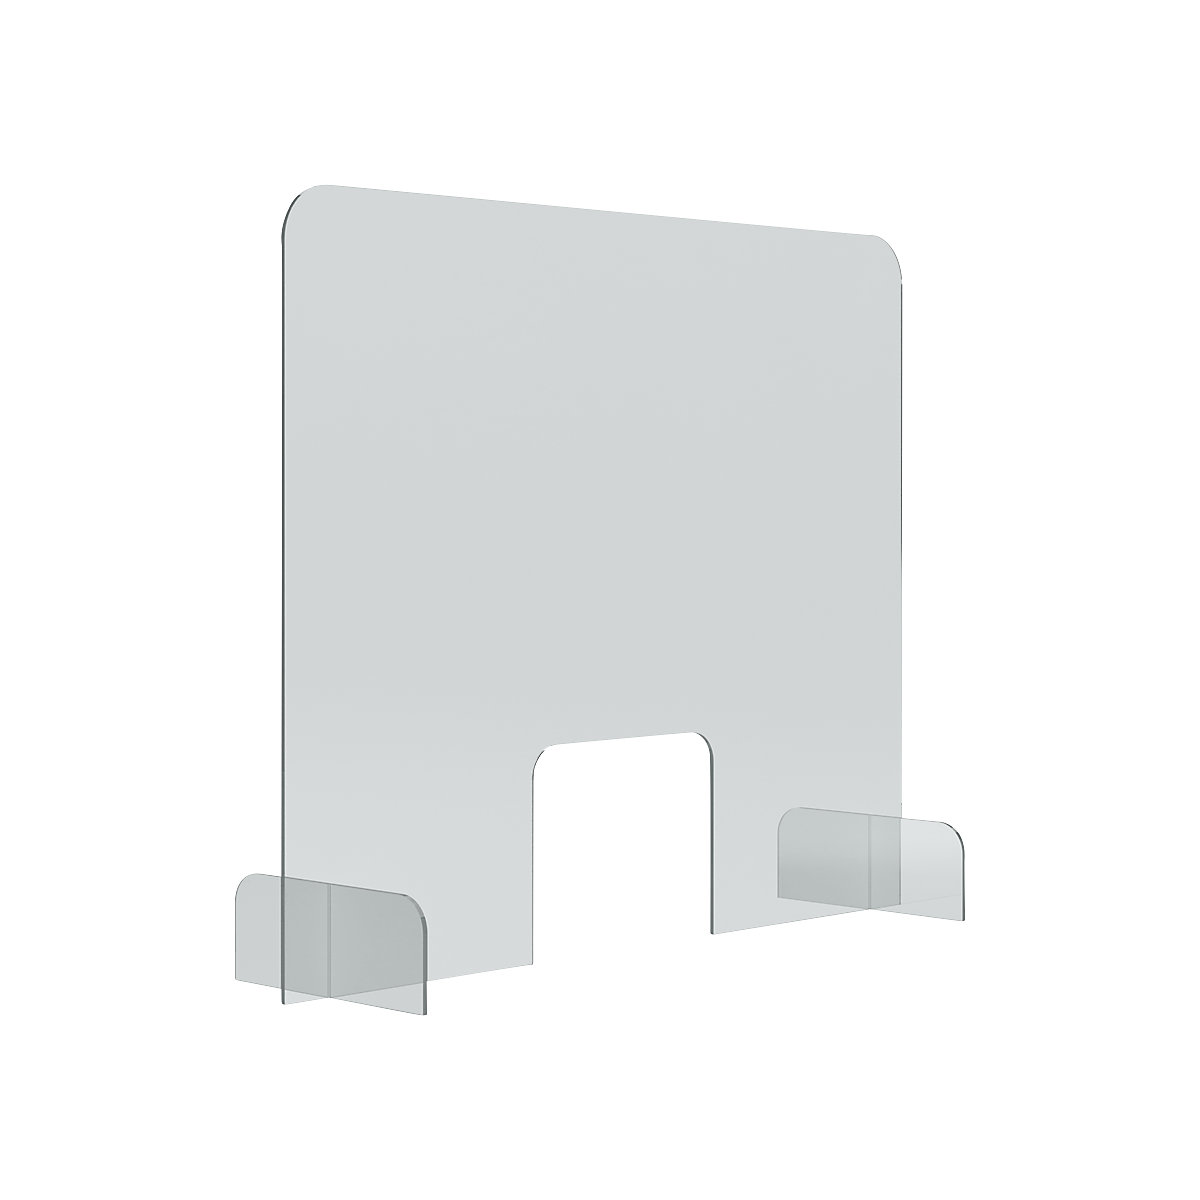 Balie- en tafelstandaard – magnetoplan, acrylglas, transparant, 5 mm dik, h x b x d = 670 x 845 x 240 mm, vanaf 5 stuks-6